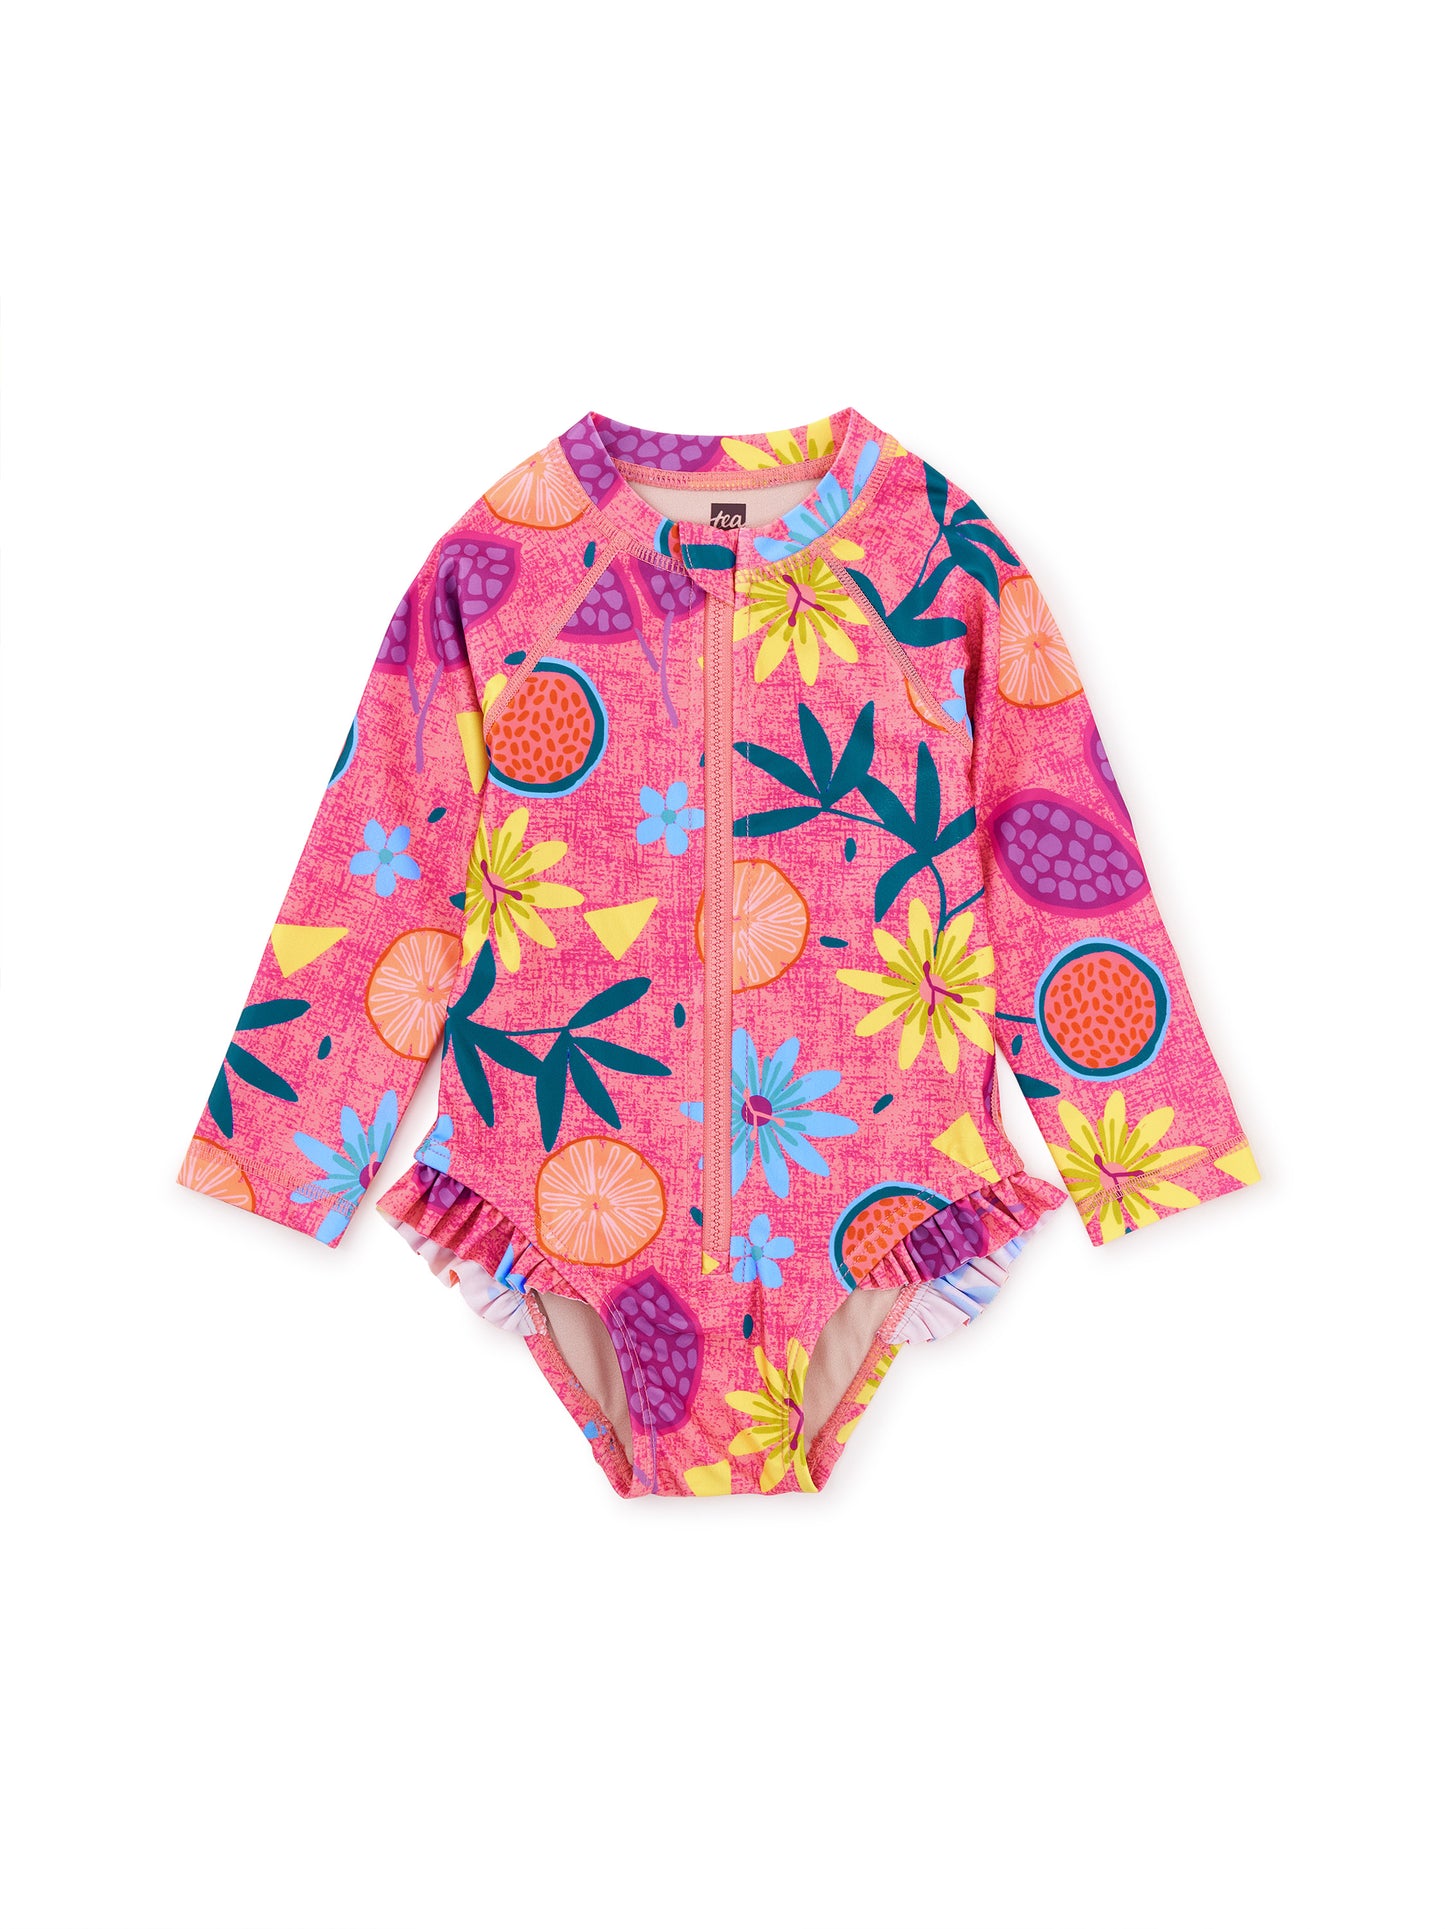 Rash Guard Baby One Piece Swimsuit - Fruit Floral Wax Print